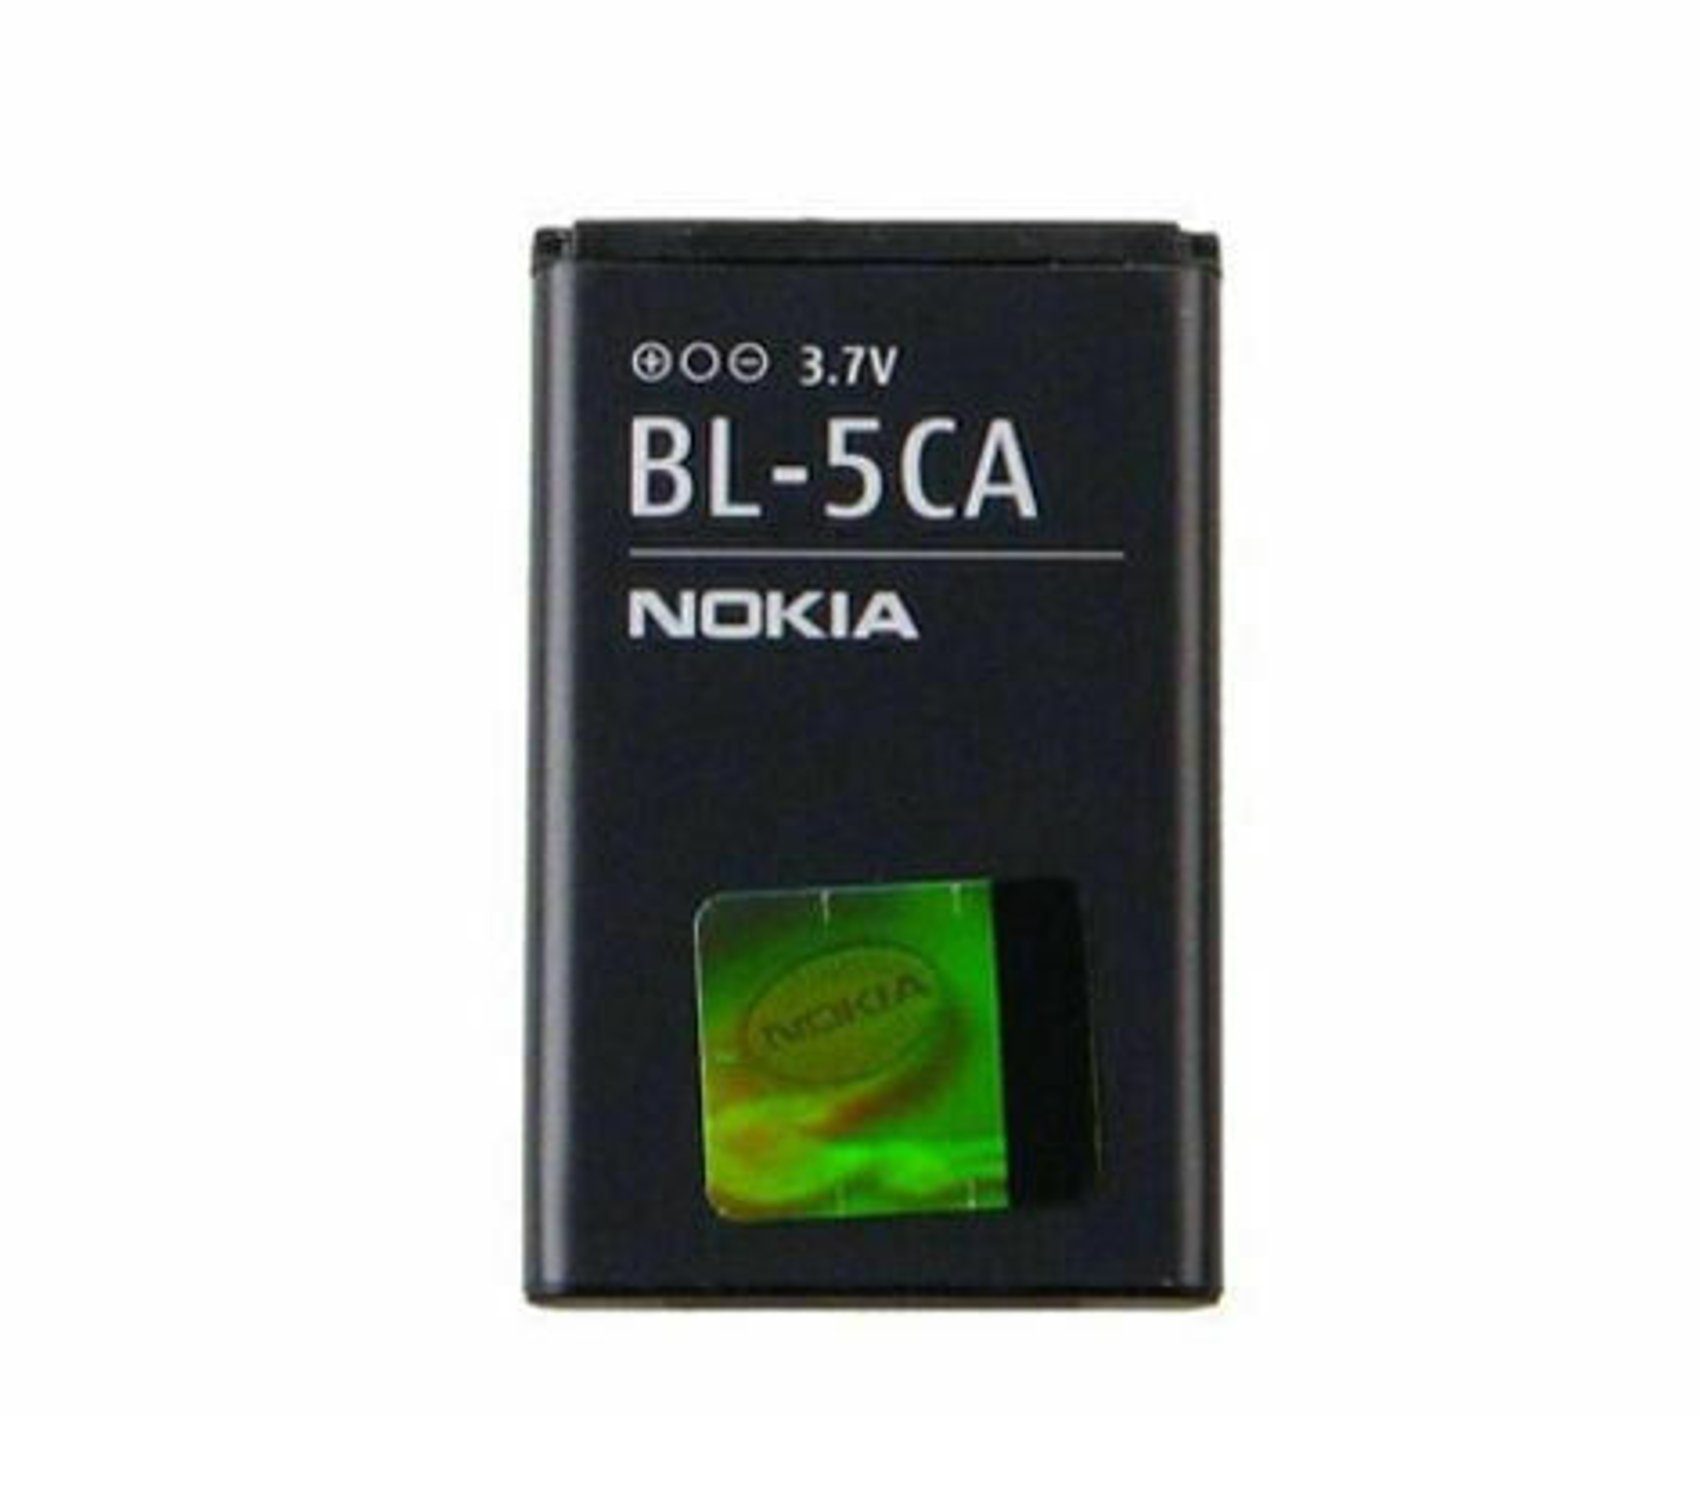 Nokia (3,7V mAh Zellen, Original Nokia Handy-Akku BL-5CA 1208 und 1100 1112 Akku V), 1200 800 800 BL-5CA Li-Ionen effizientes Nokia Überladungsschutz mAh 1209 1110 Schnelles Laden, Nokia